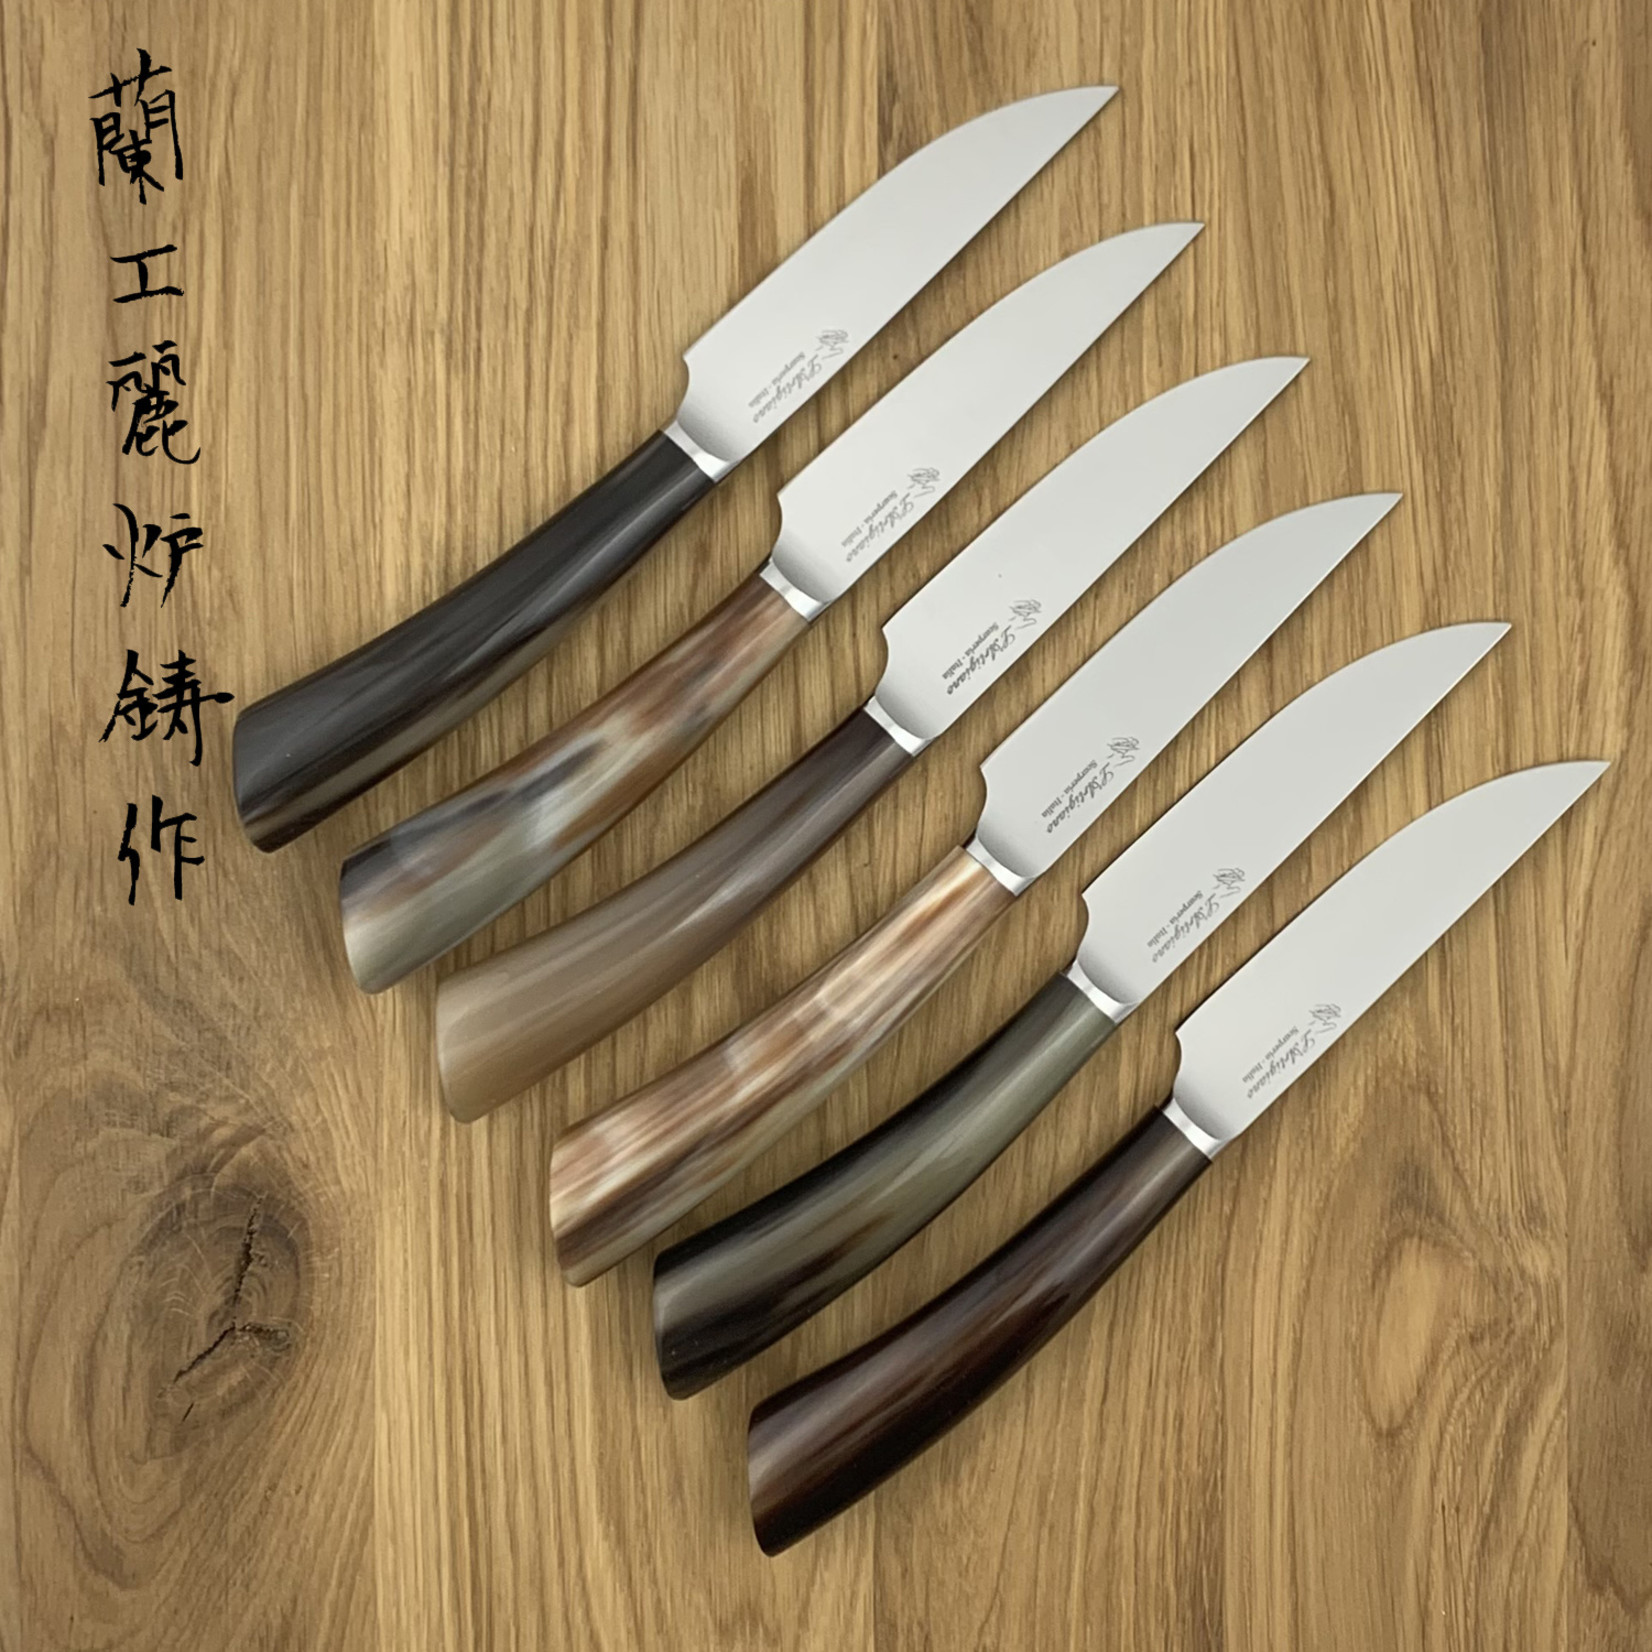 L'ARTIGIANO SCARPERIA Rustico steak knives set horn (6 items)